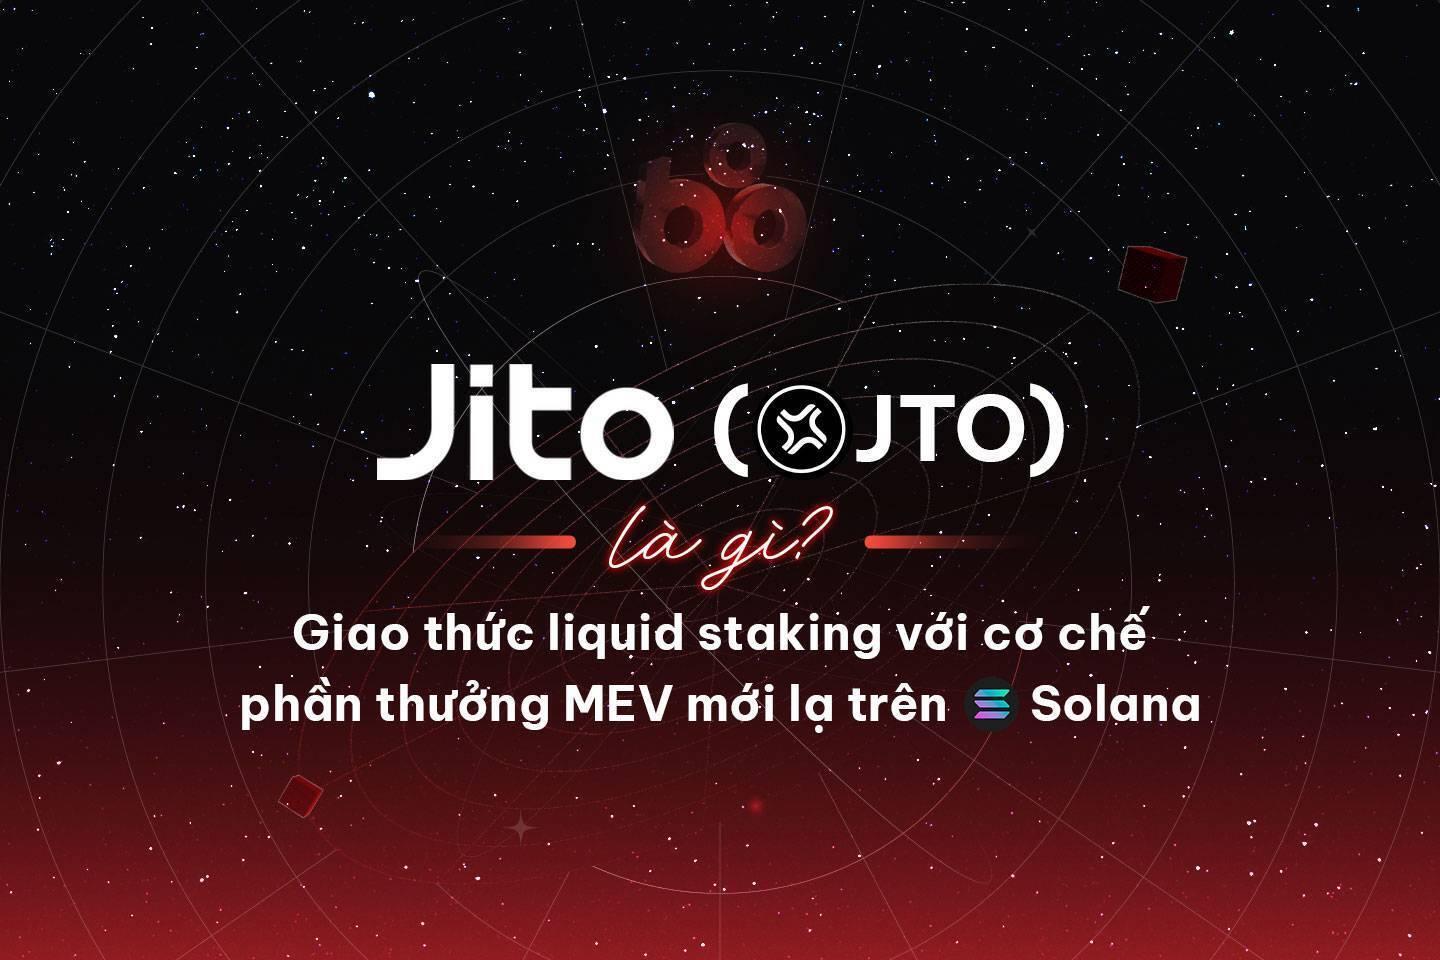 jito-jto-la-gi-giao-thuc-liquid-staking-voi-co-che-phan-thuong-mev-moi-la-tren-solana